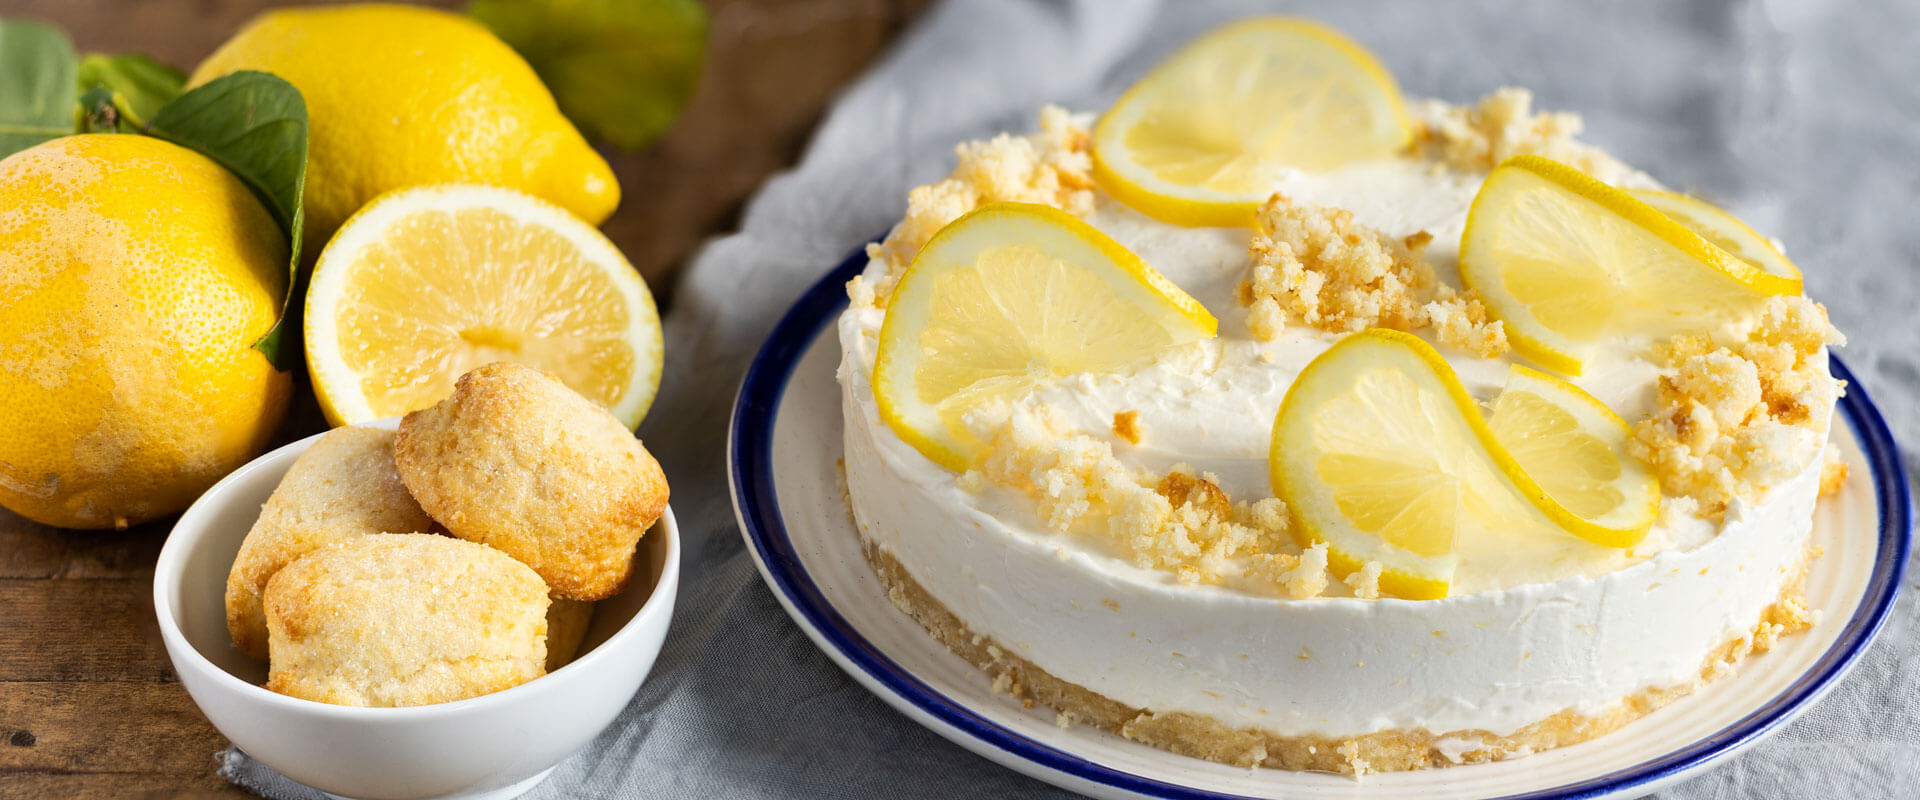 Ricetta cheesecake al limone – Fratelli Carli